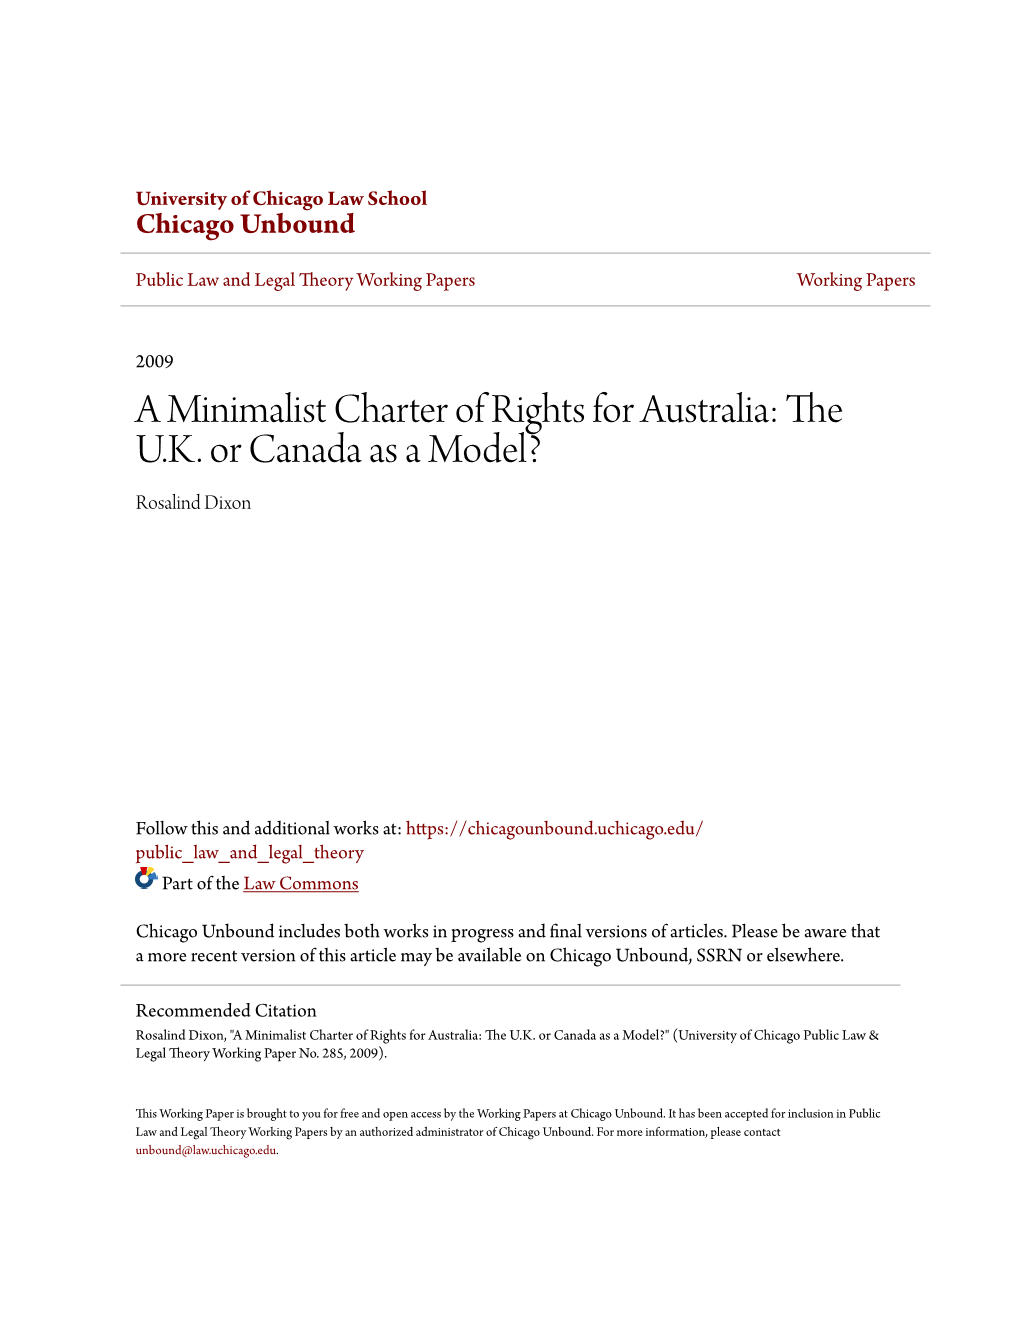 A Minimalist Charter of Rights for Australia: the U.K